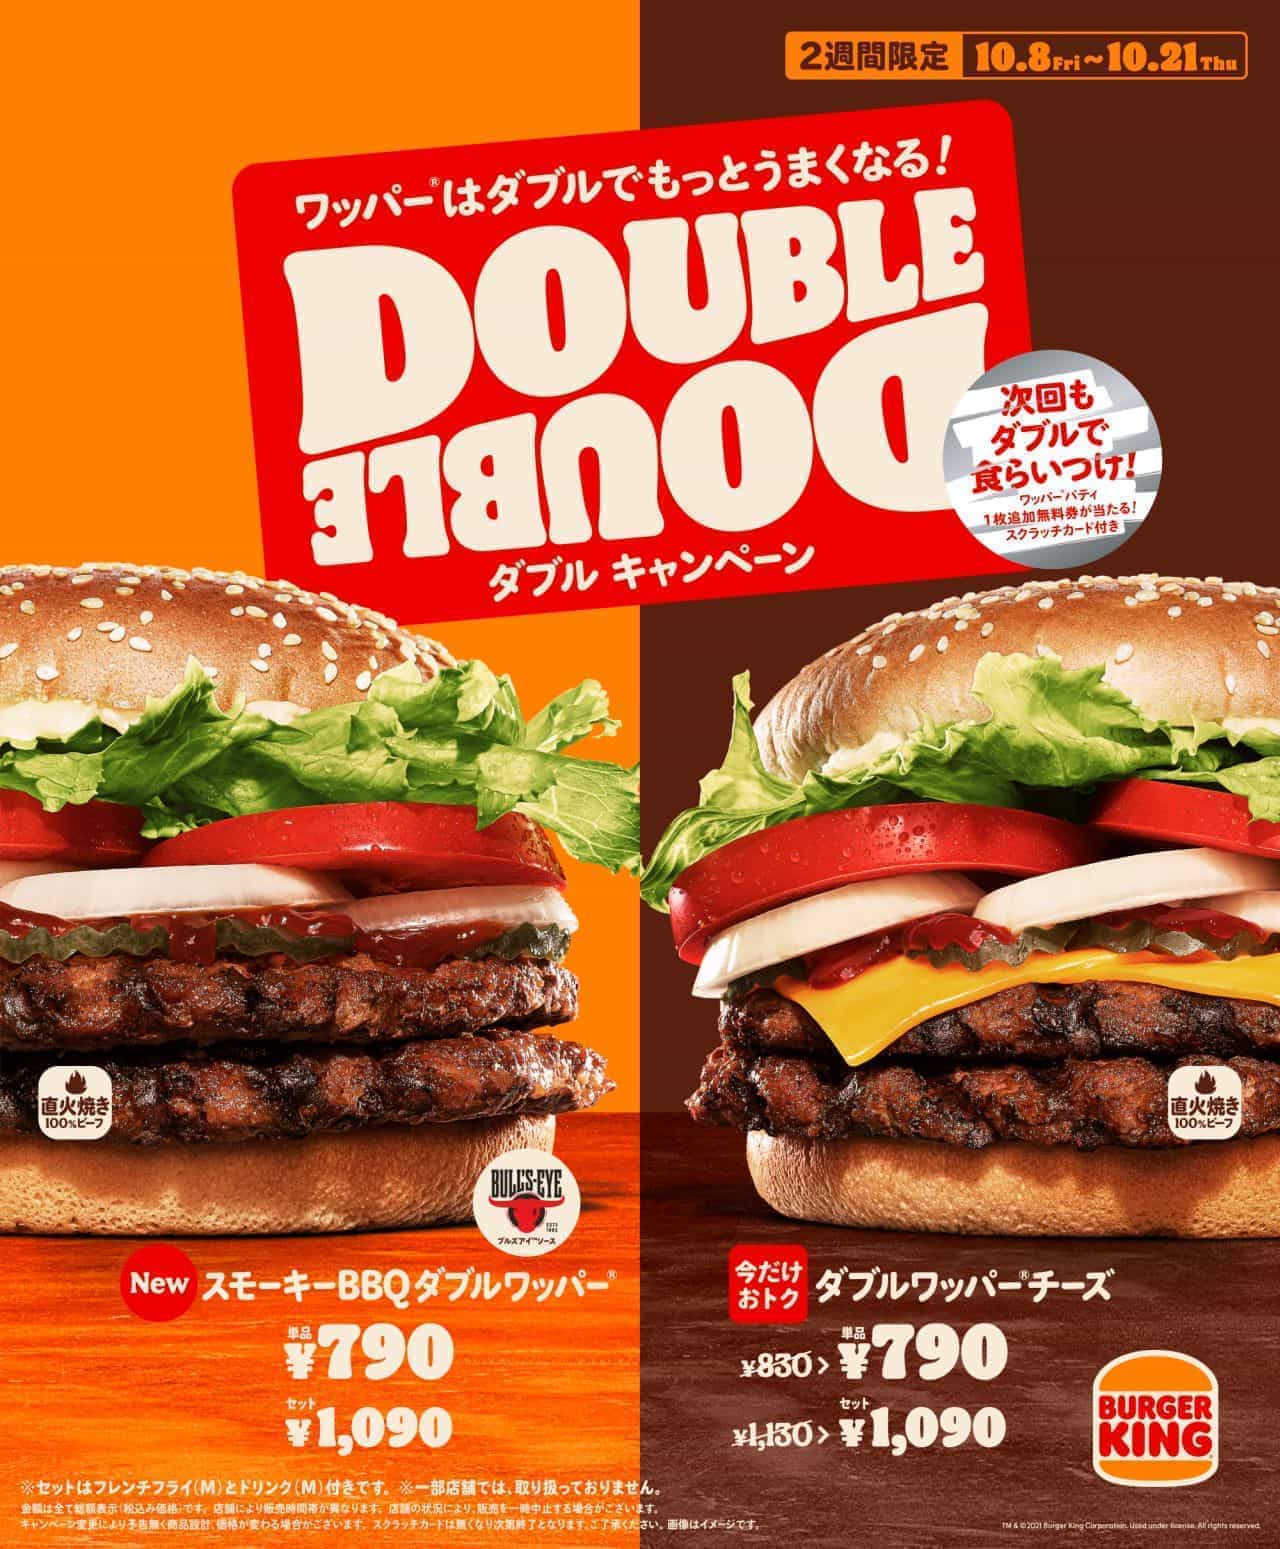 Burger King "Smoky BBQ Double Wapper"